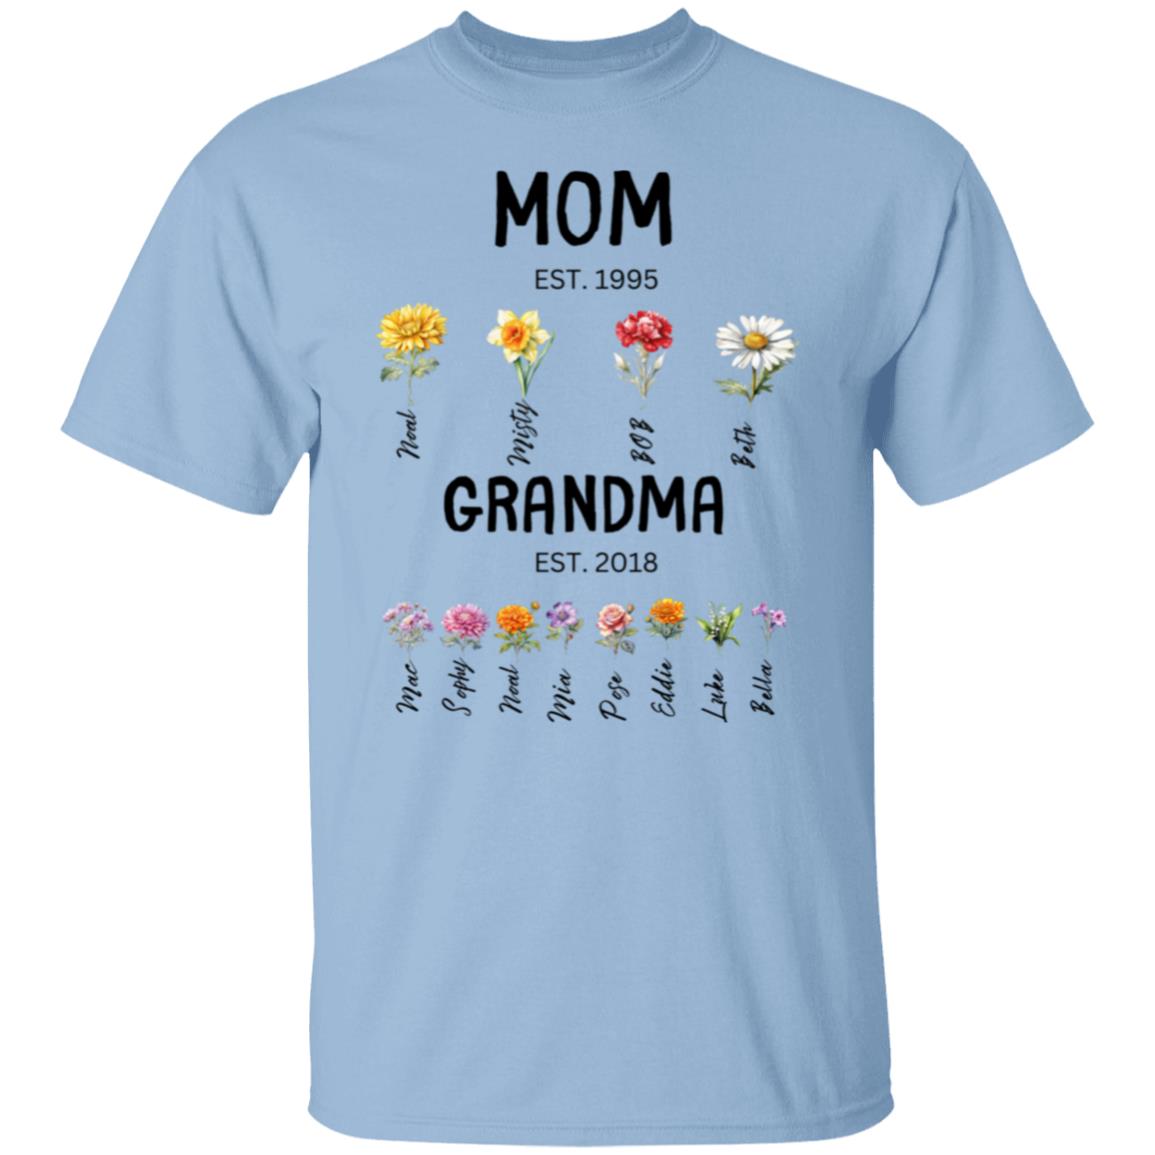 MomGrandma EST. Birth flowers Mom/Grandma Est. birth flowers Tees Shirt